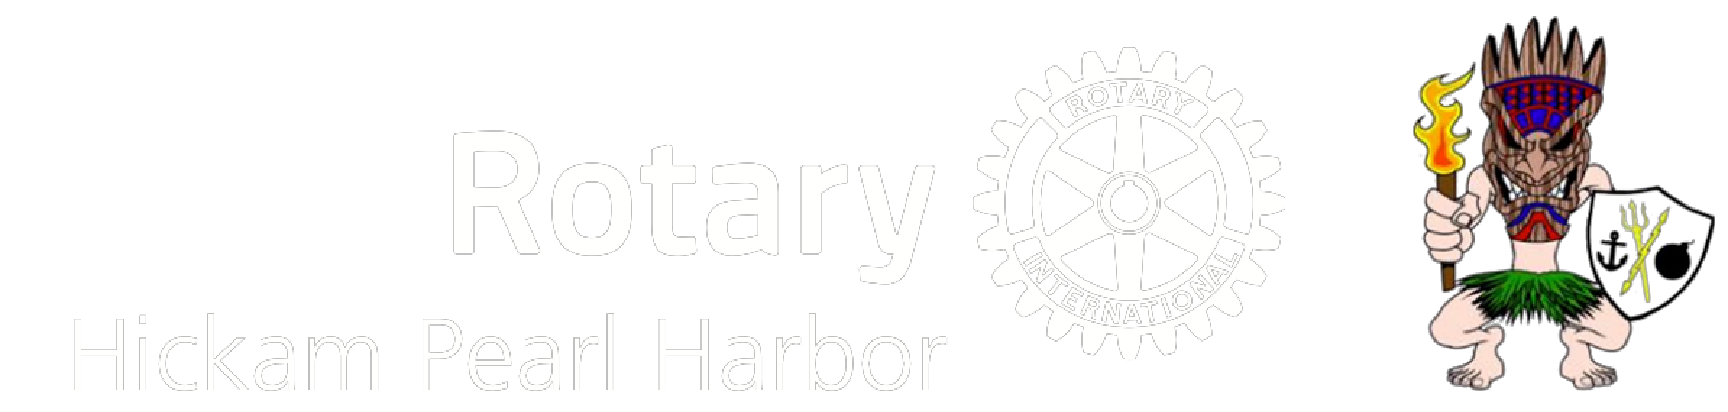 Rotary Club of Hickam Pearl Harbor